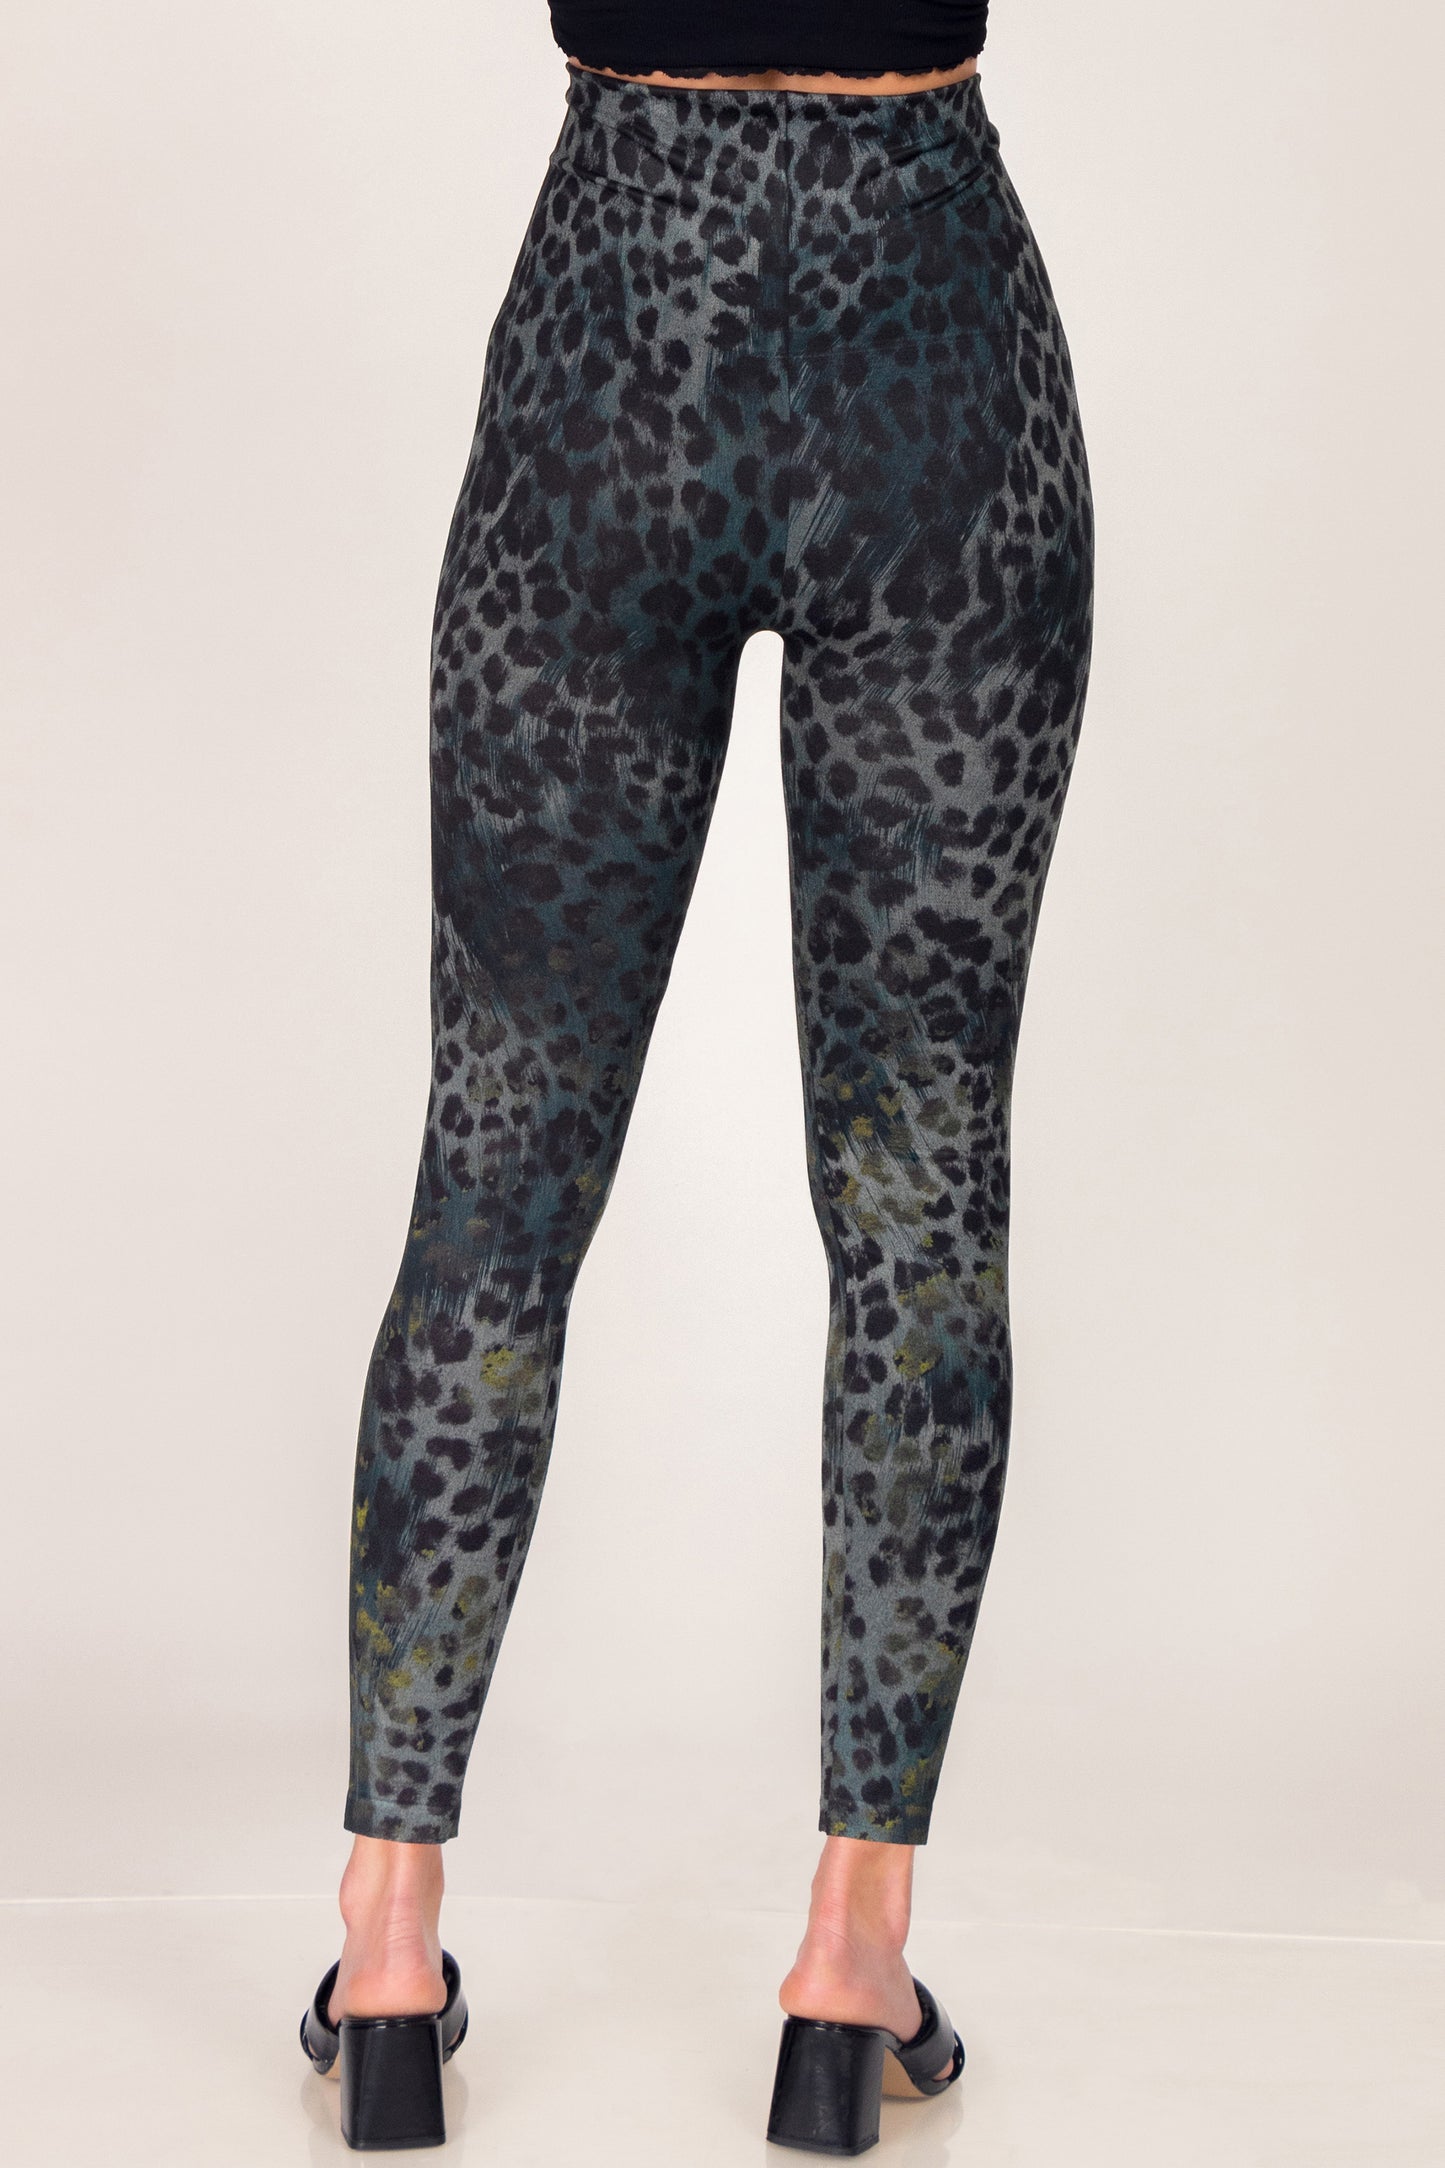 Silver Falls Leopard Printed Legging